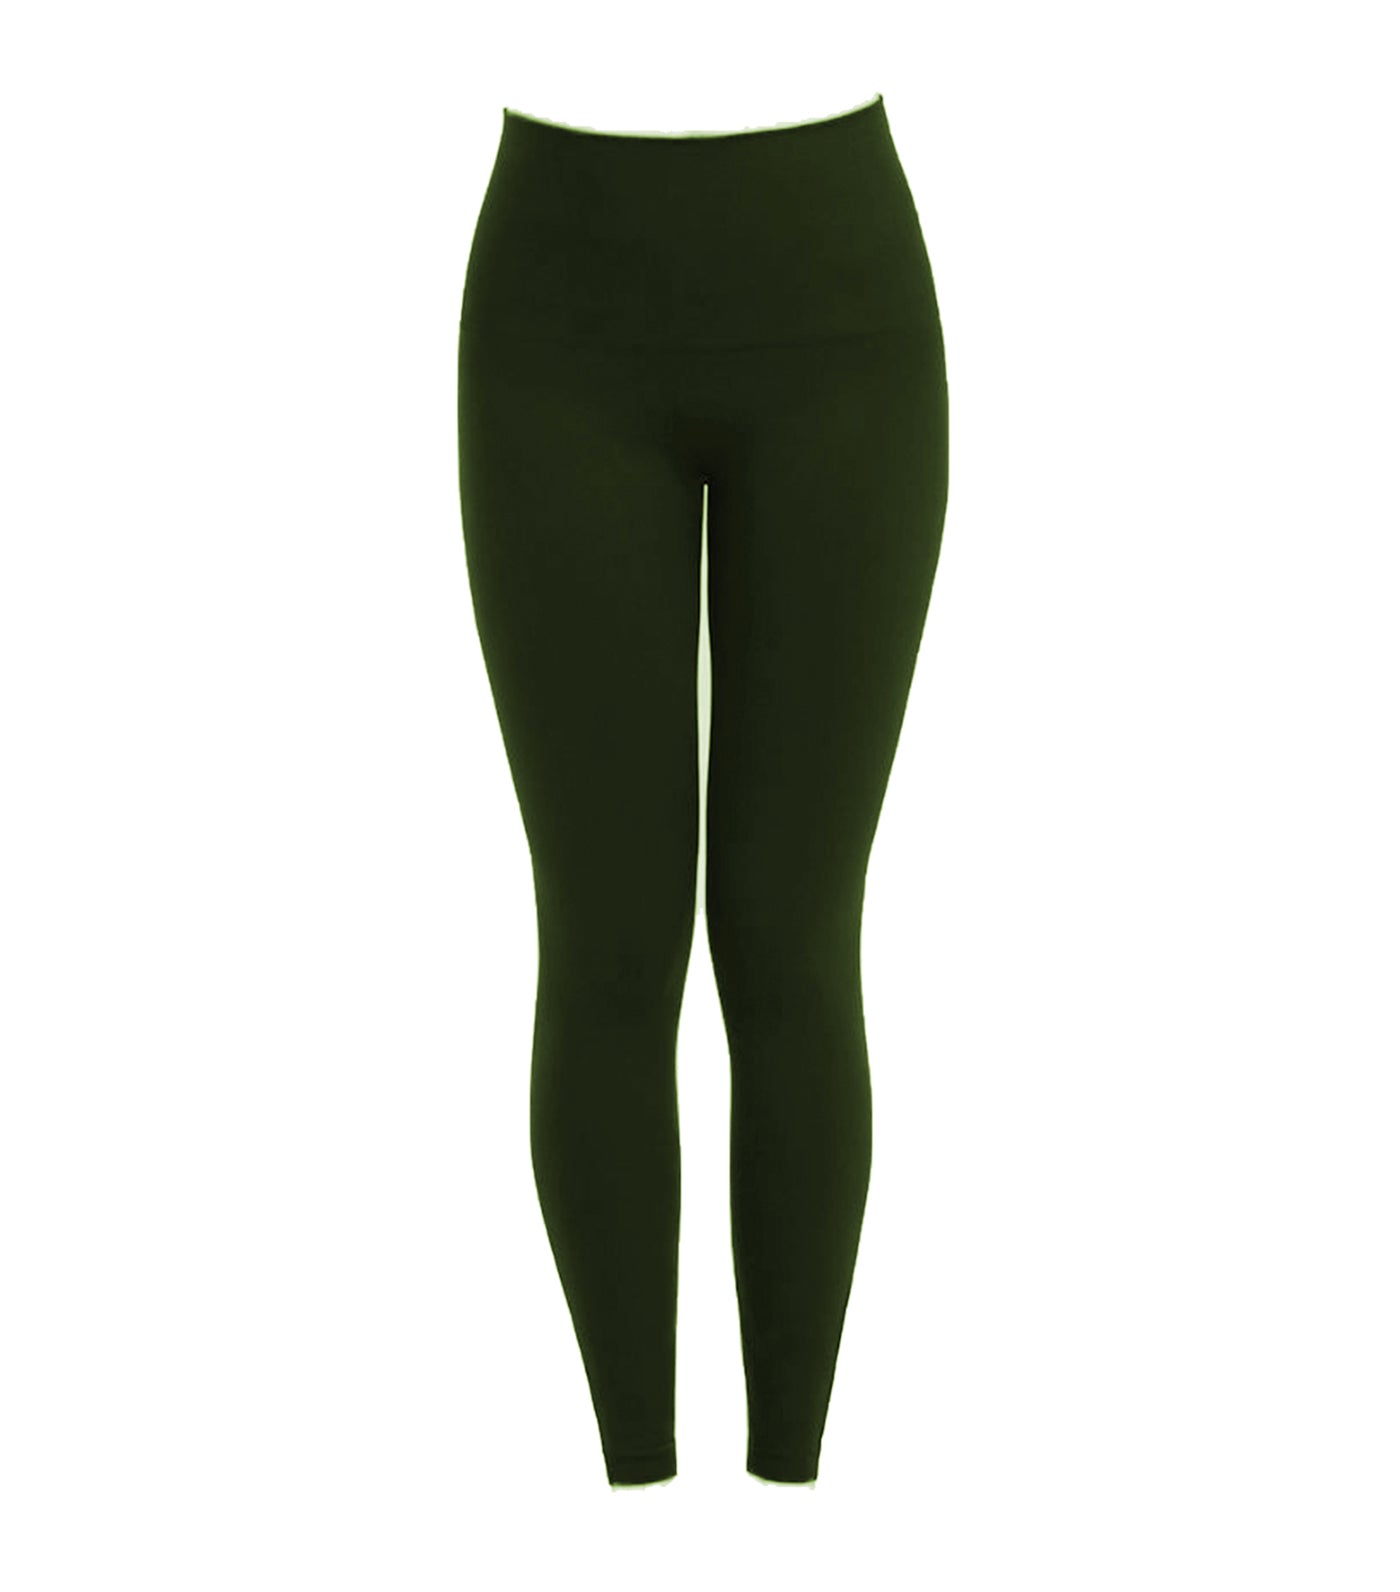 Spanx Green Camo Jean-Ish Mid-Rise Compression Leggings Size XS